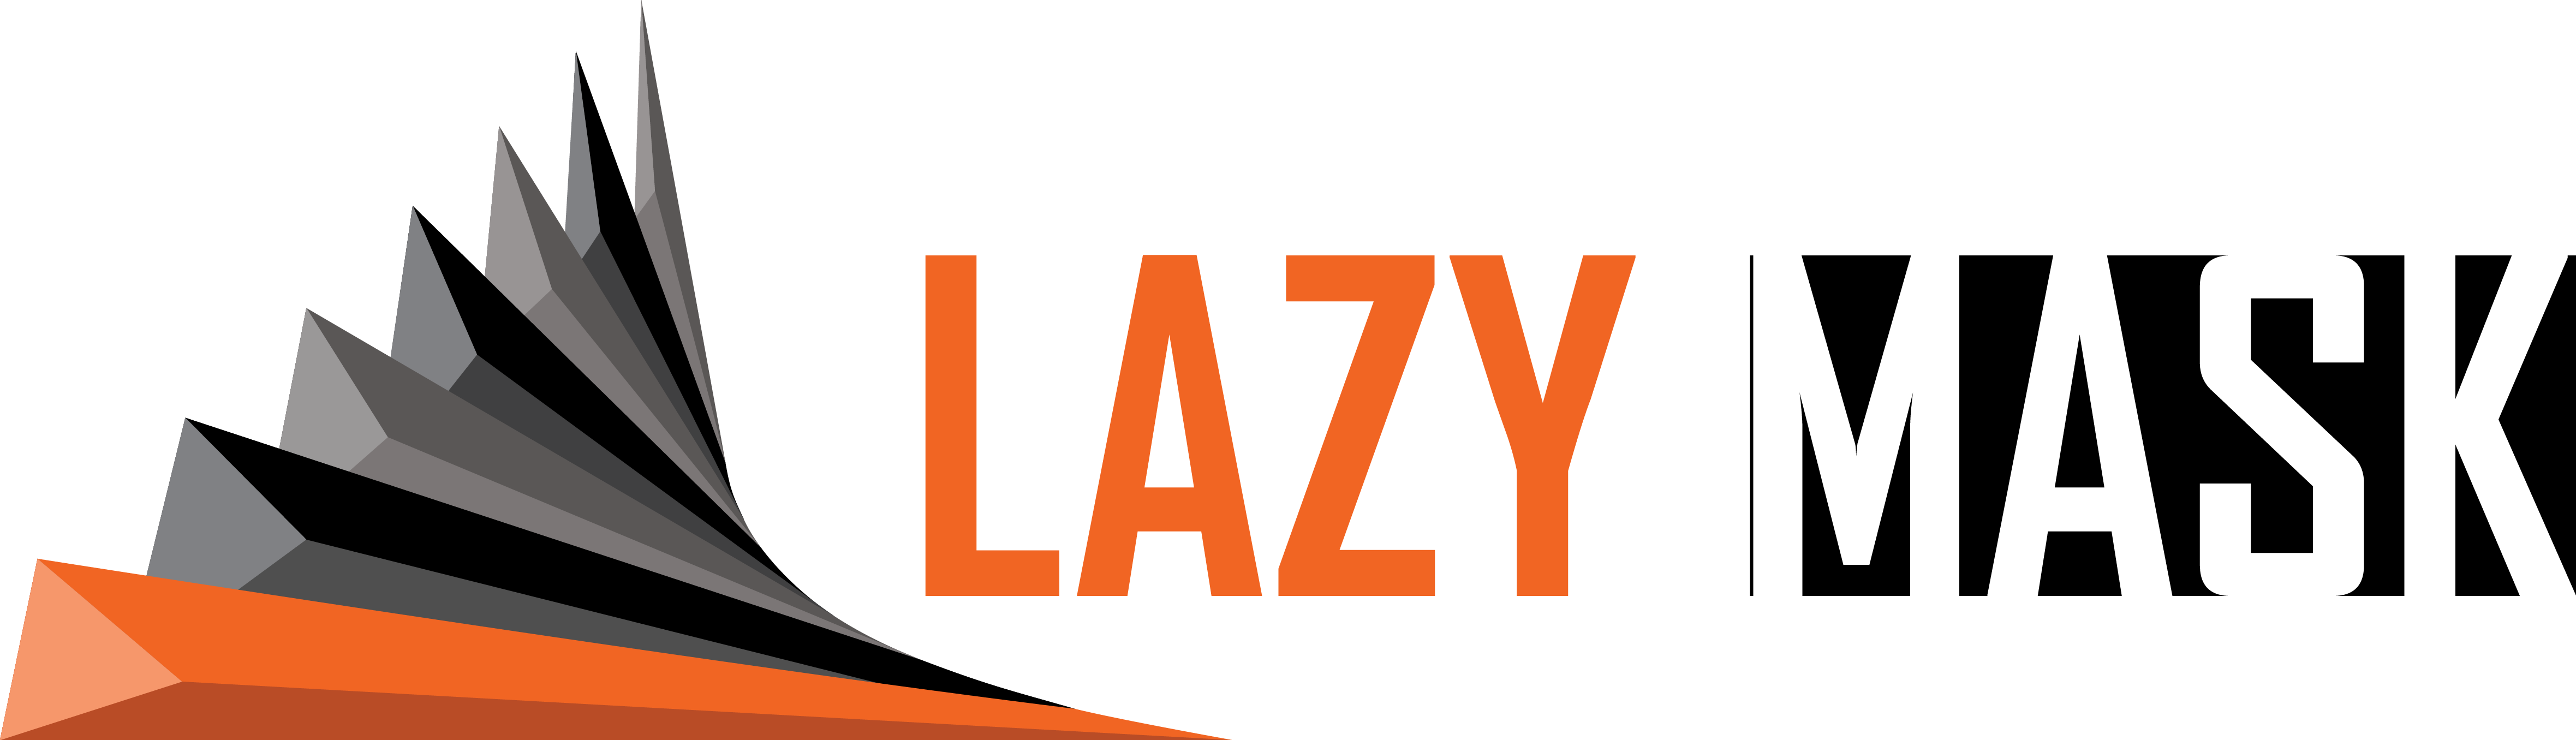 Main Logo Of Lazy Mask - We The People (4720x1356)